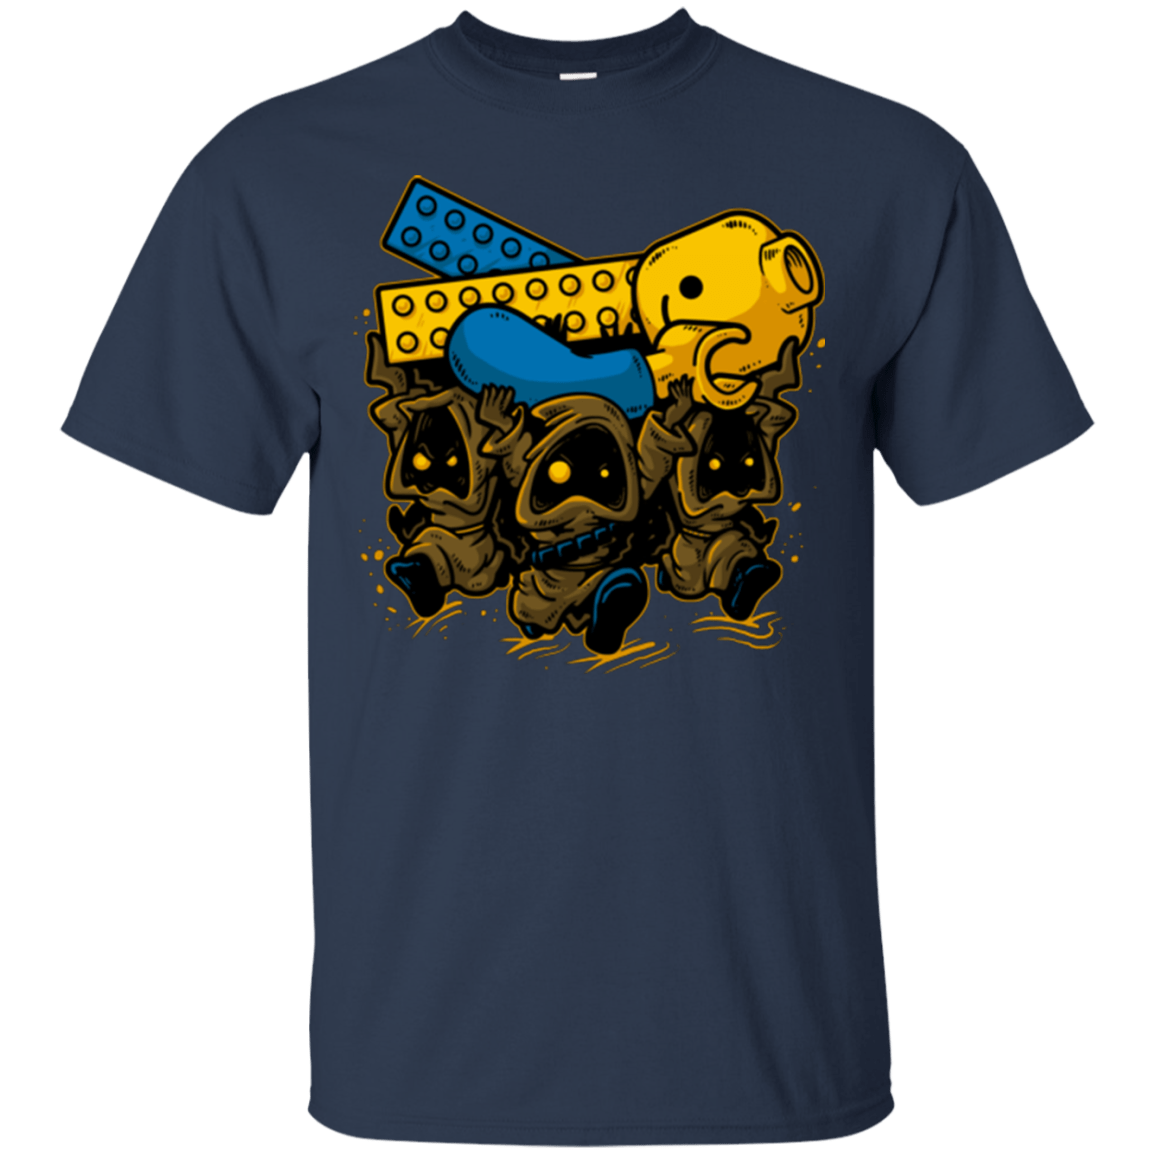 T-Shirts Navy / Small PLASTIC DEBRIS T-Shirt